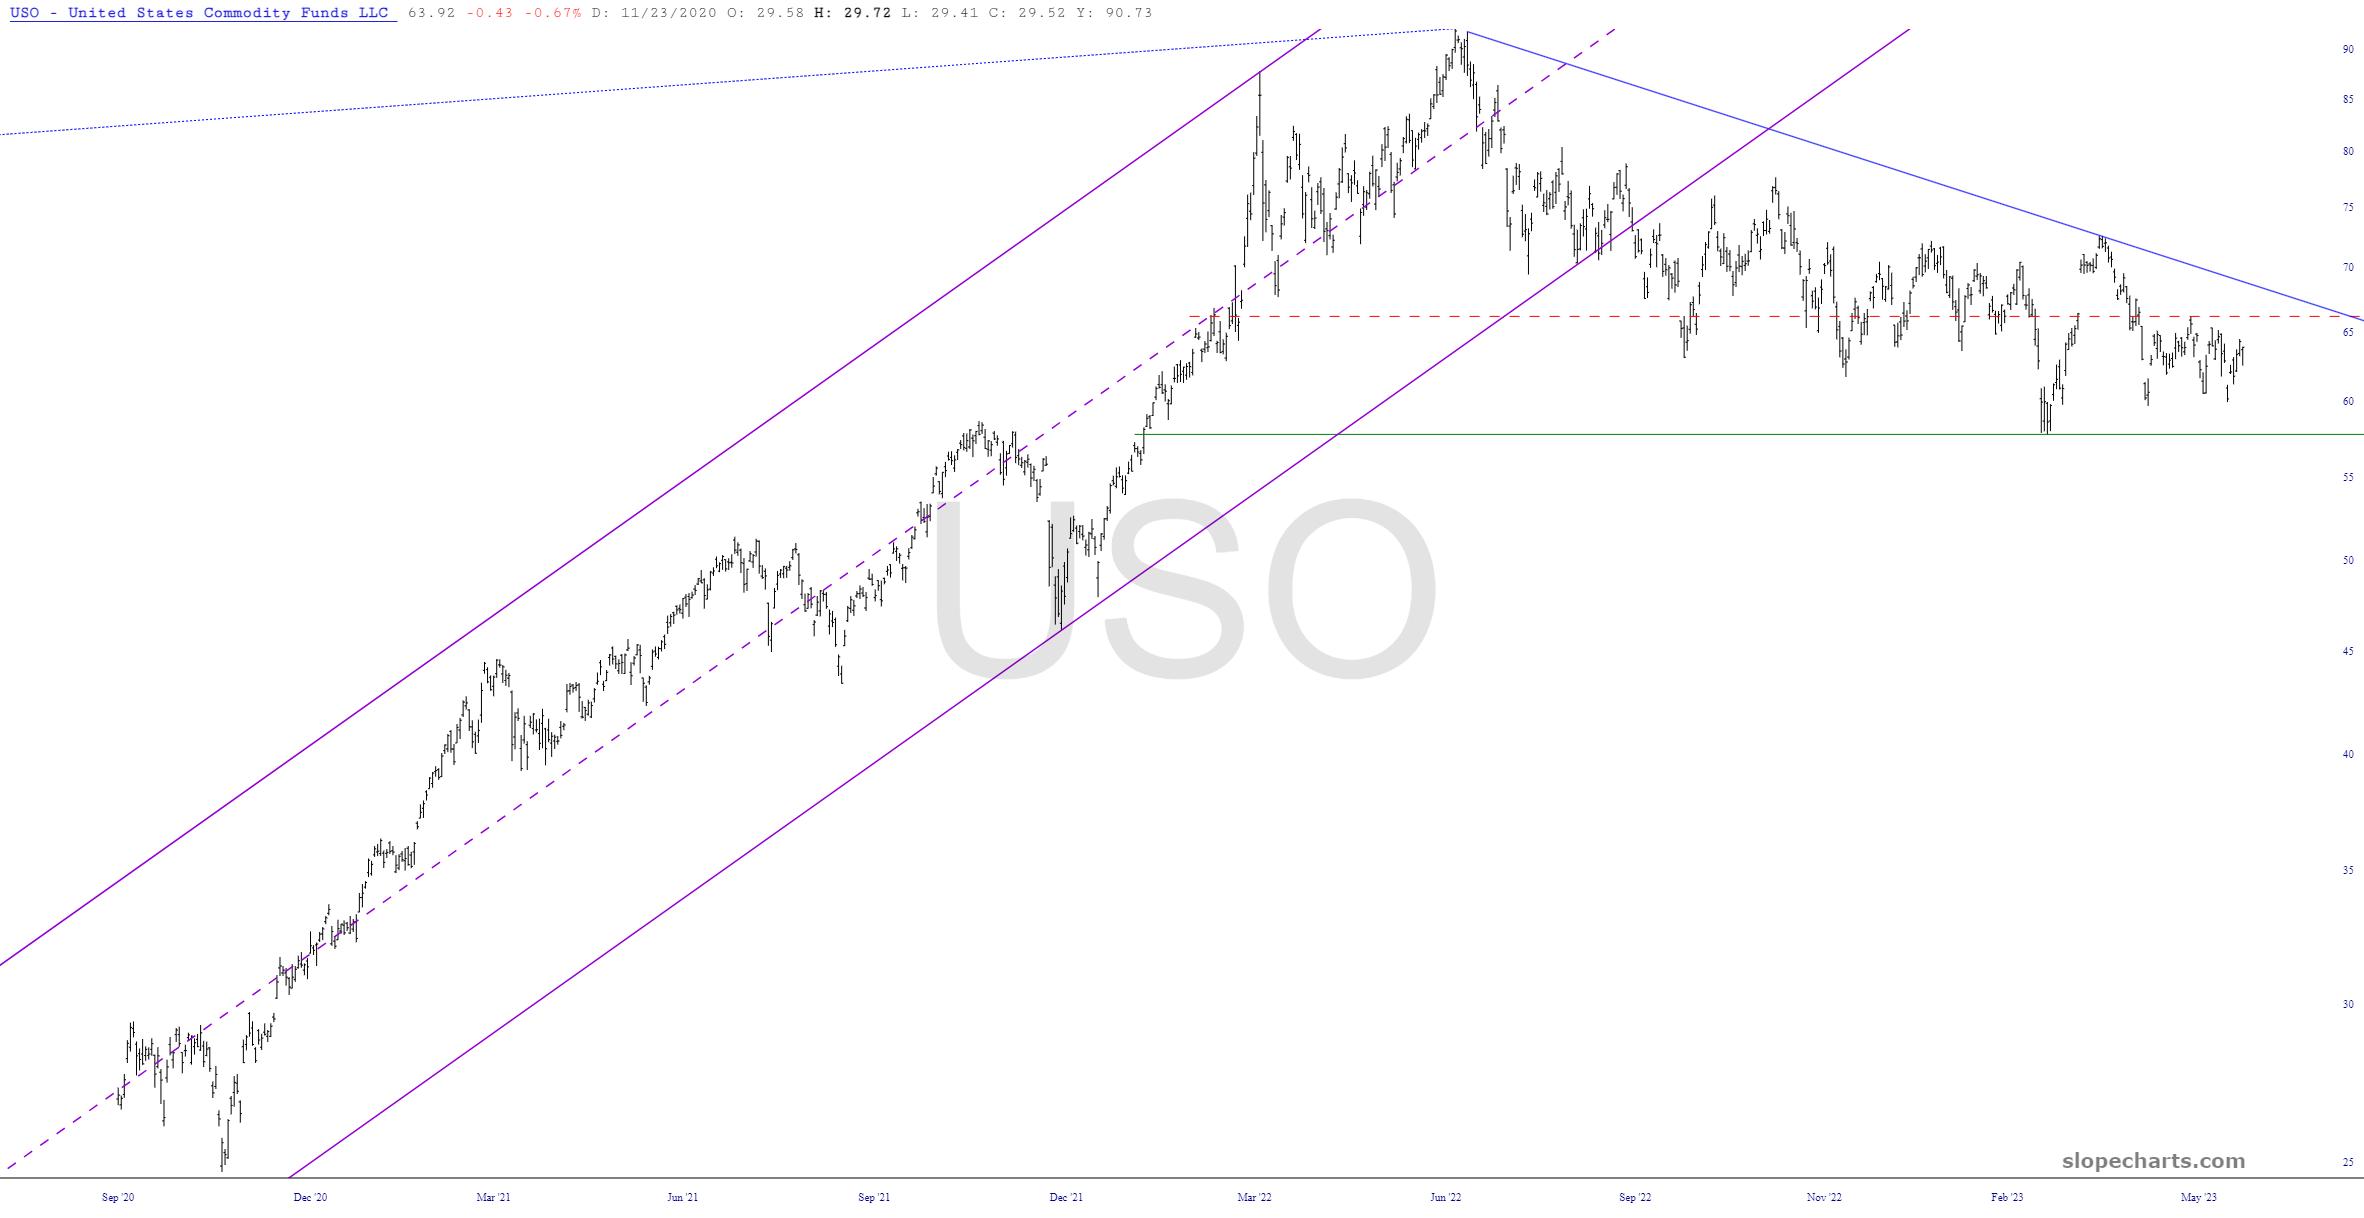 USO Chart